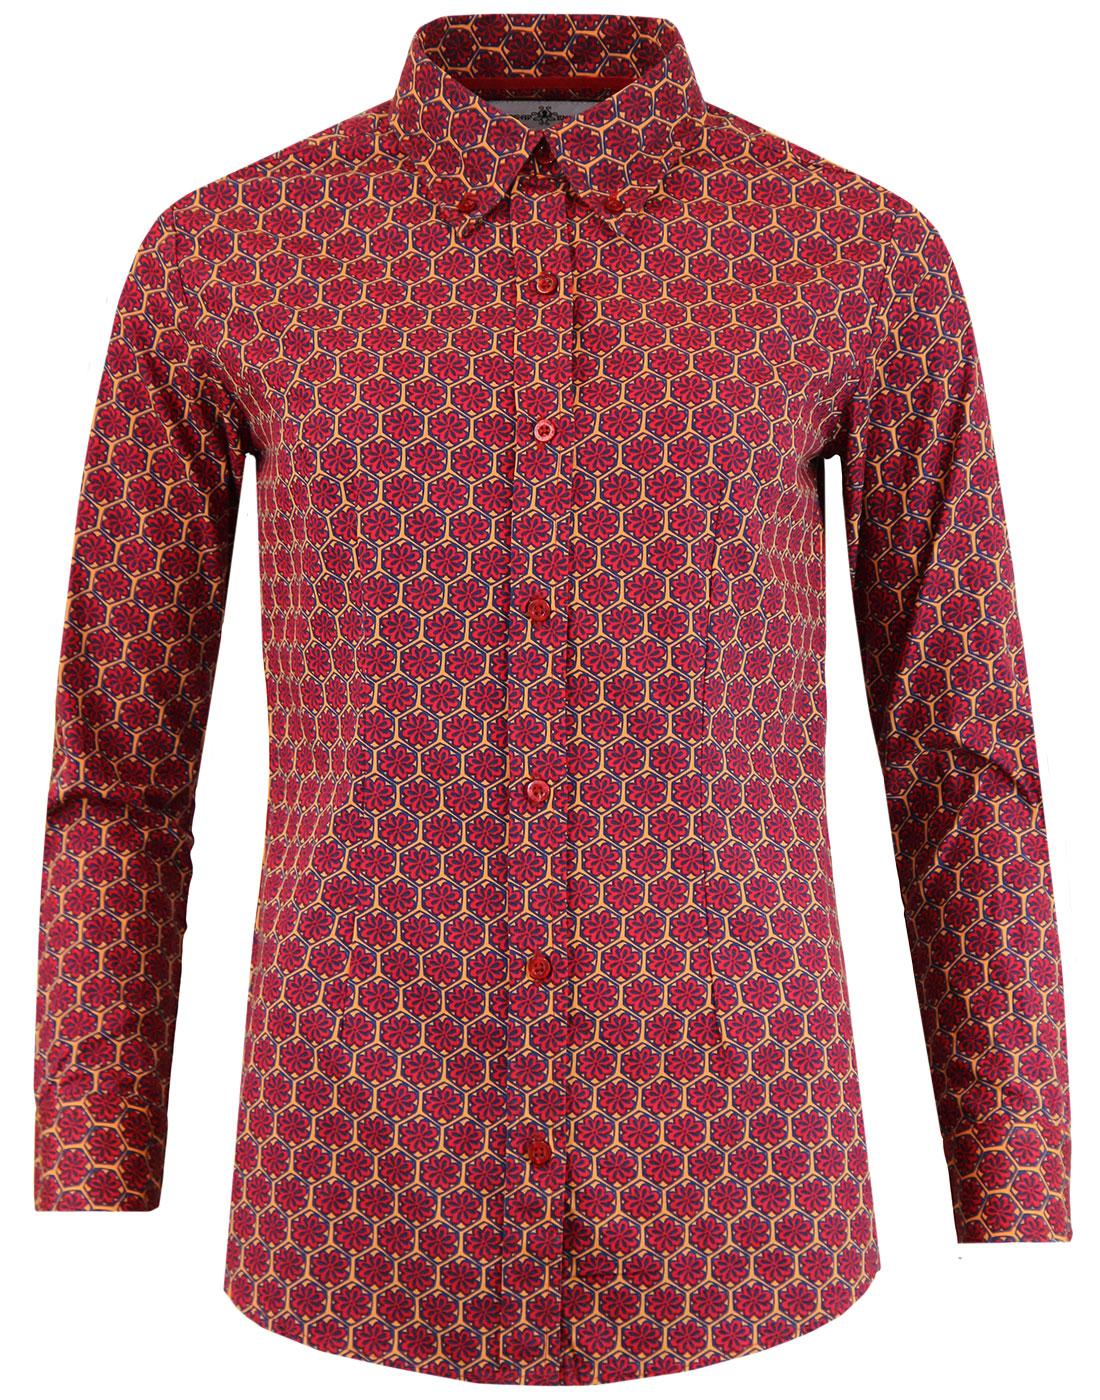 Saffron MADCAP ENGLAND Retro Floral Hexagon Shirt